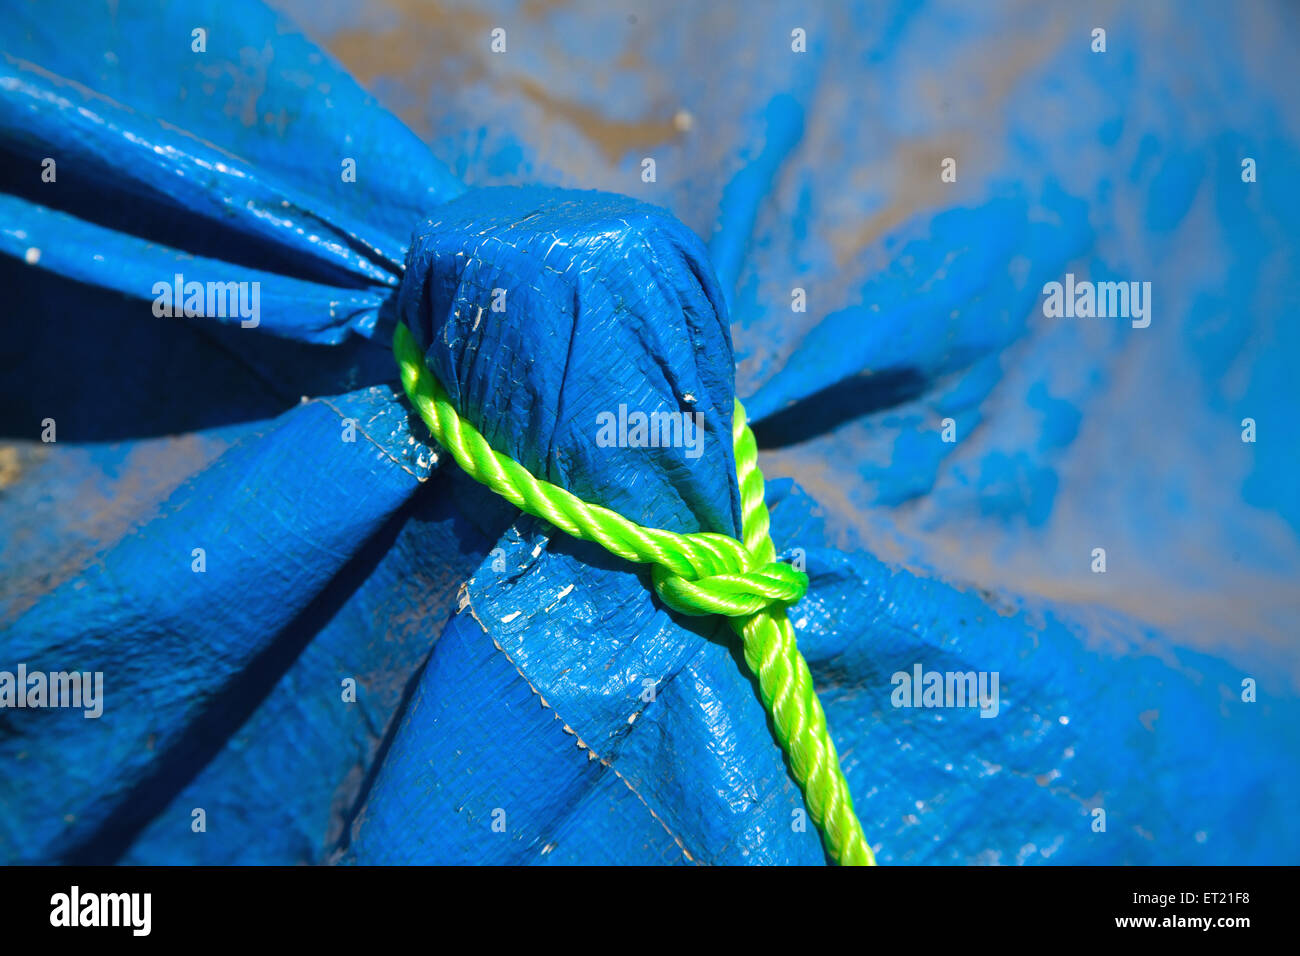 Nylon green thread on blue plastic Stock Photo